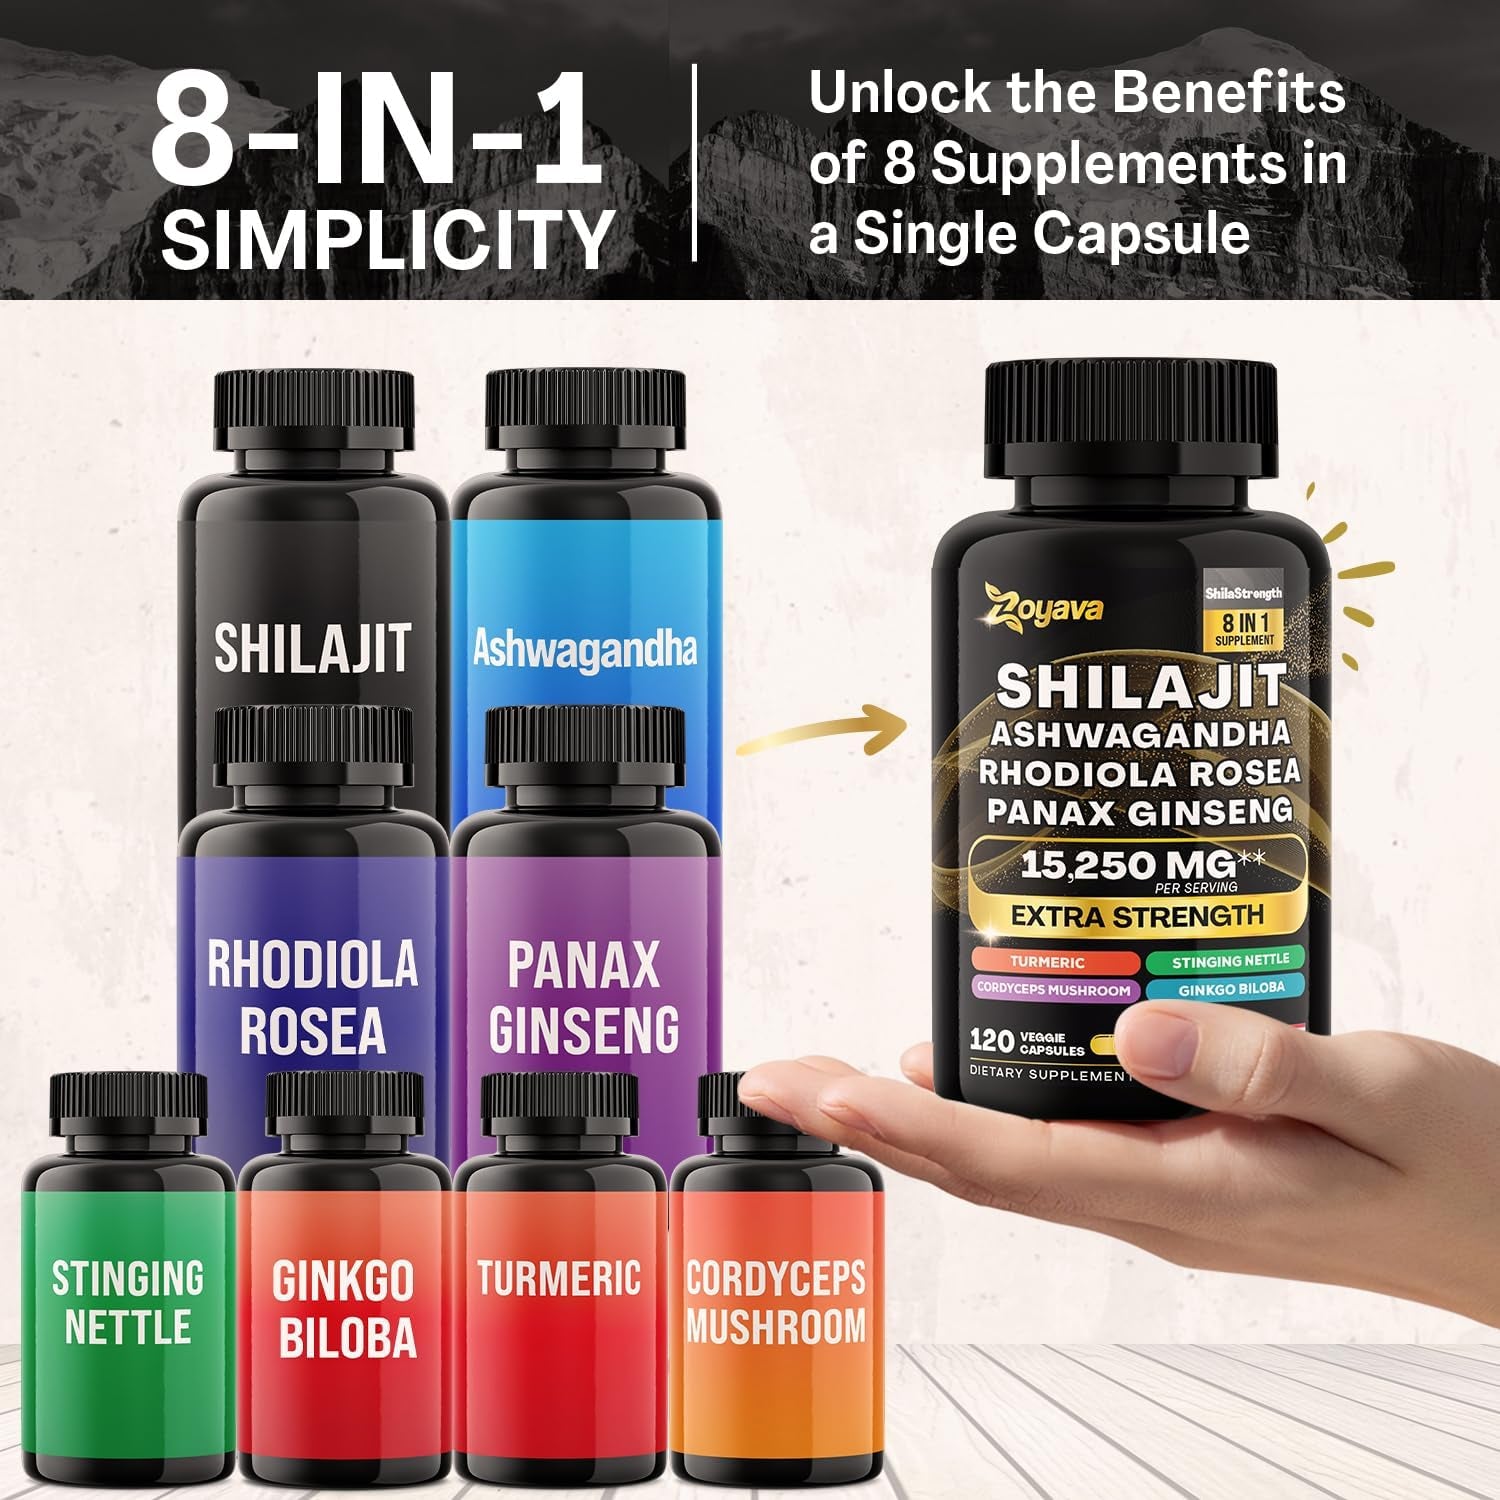 Shilajit 8-In-1 Supplement and Collagen 14-In-1 Supplement Bundle